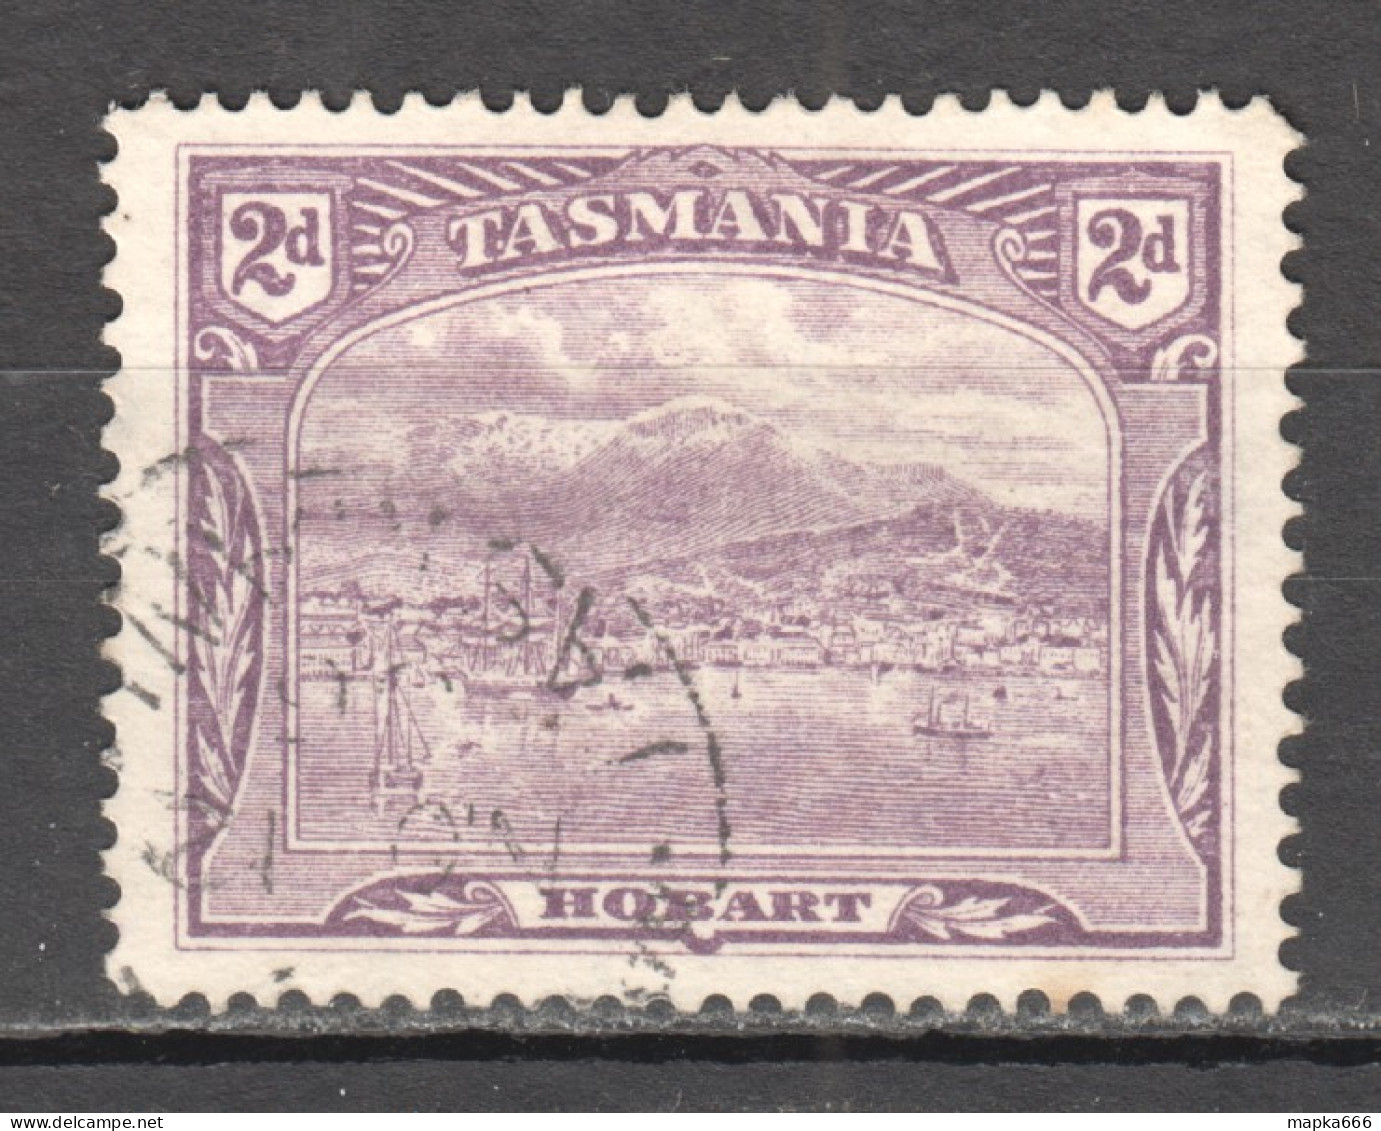 Tas218 1905 Australia Tasmania Gibbons Sg #251 1St Used - Oblitérés